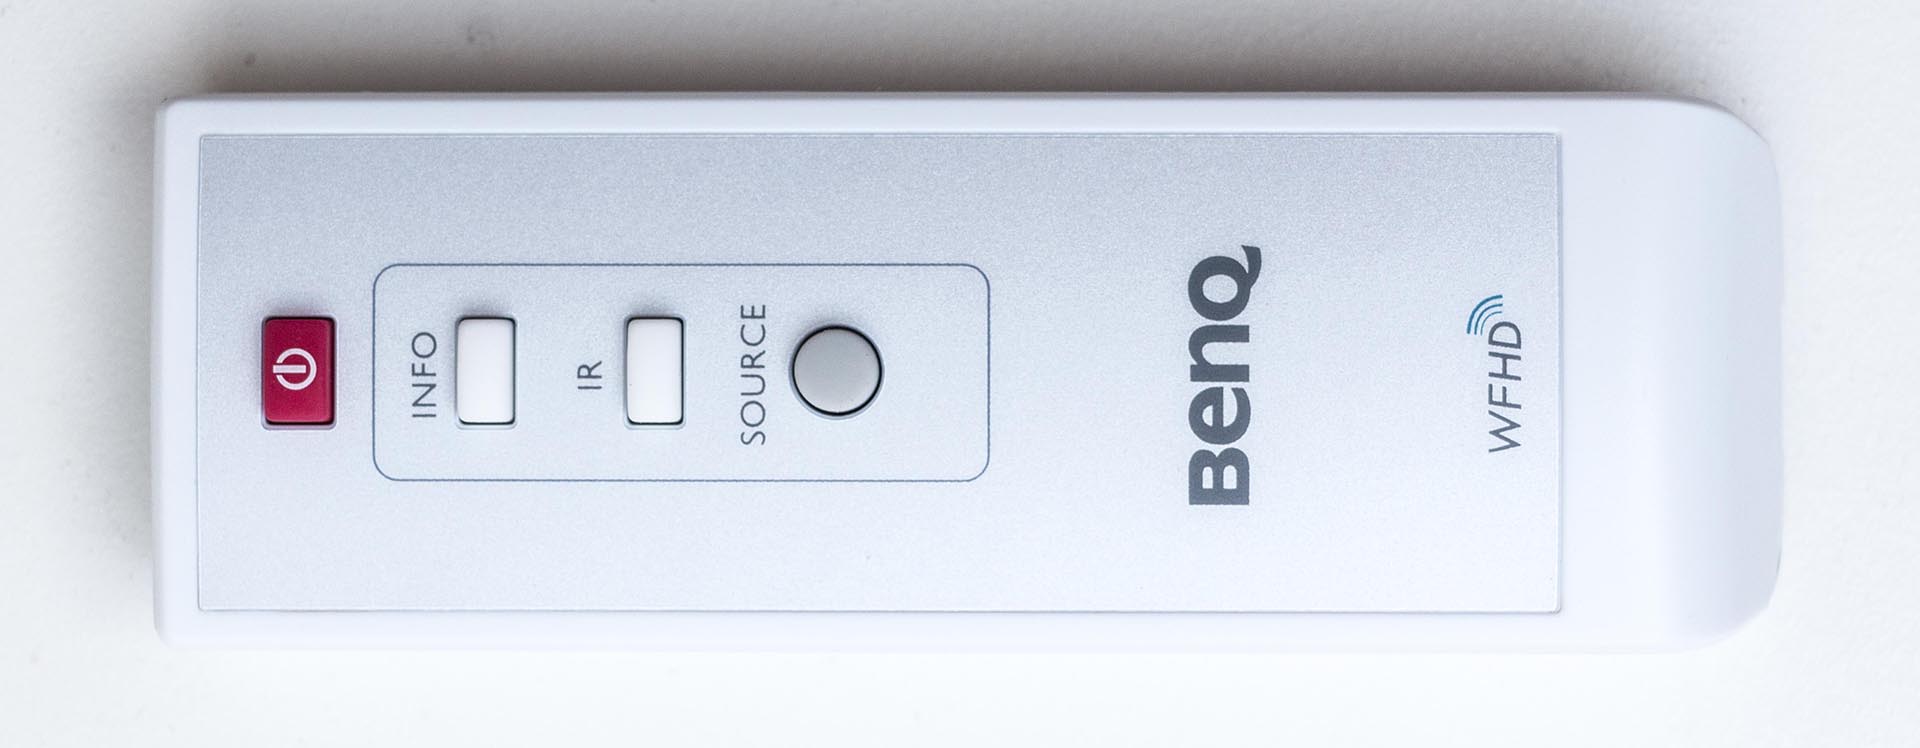 BenQ Wireless FHD Kit IMG_0325